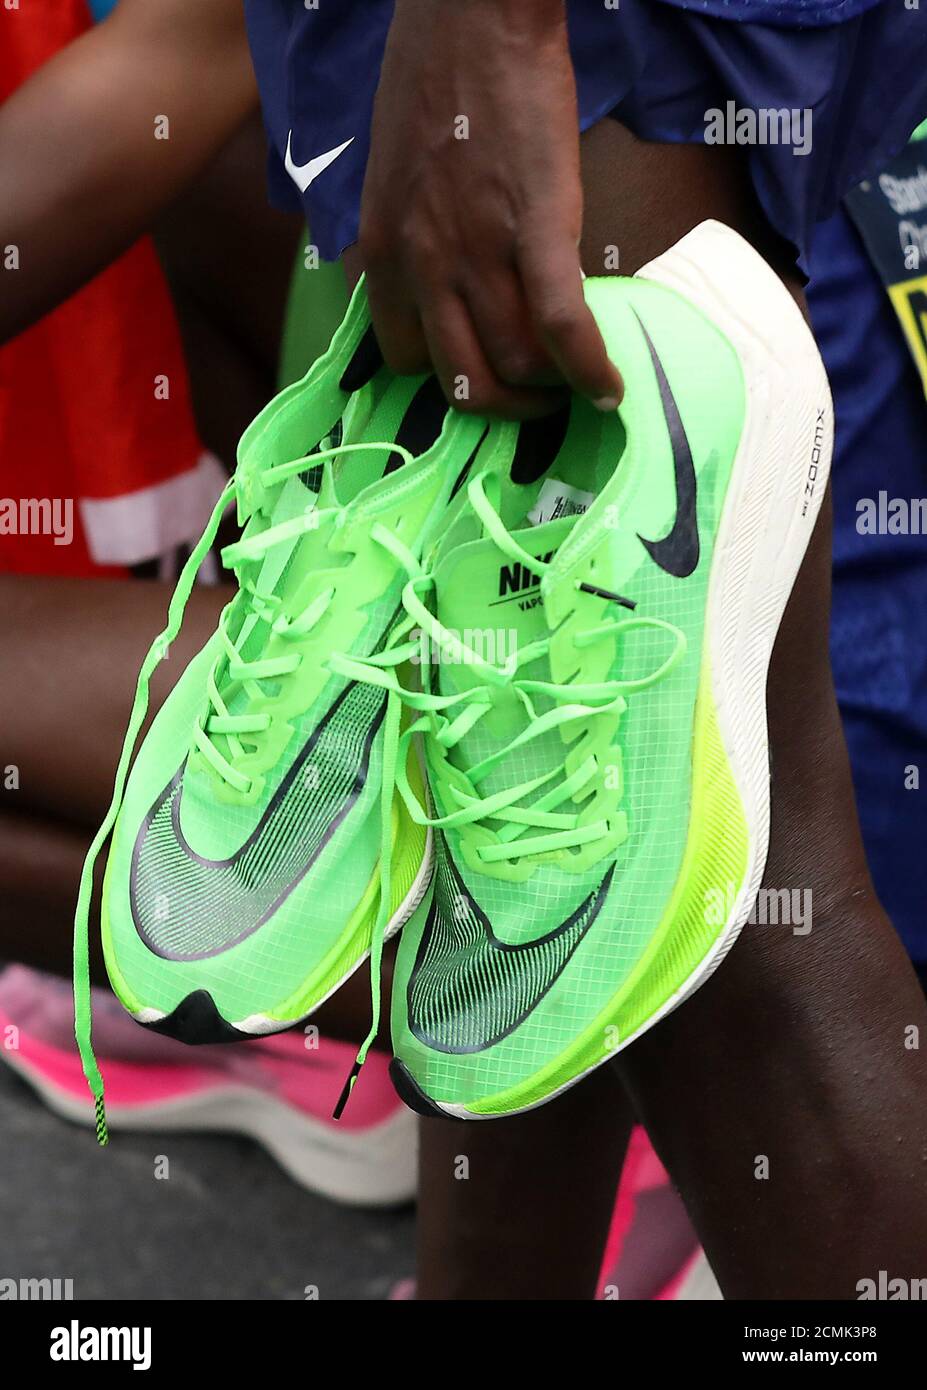 Athletics - Dubai Marathon - Dubai, United Arab Emirates - January 24, 2020  General view of an athlete holding Nike Vaporfly shoes after the race  REUTERS/Christopher Pike Stock Photo - Alamy